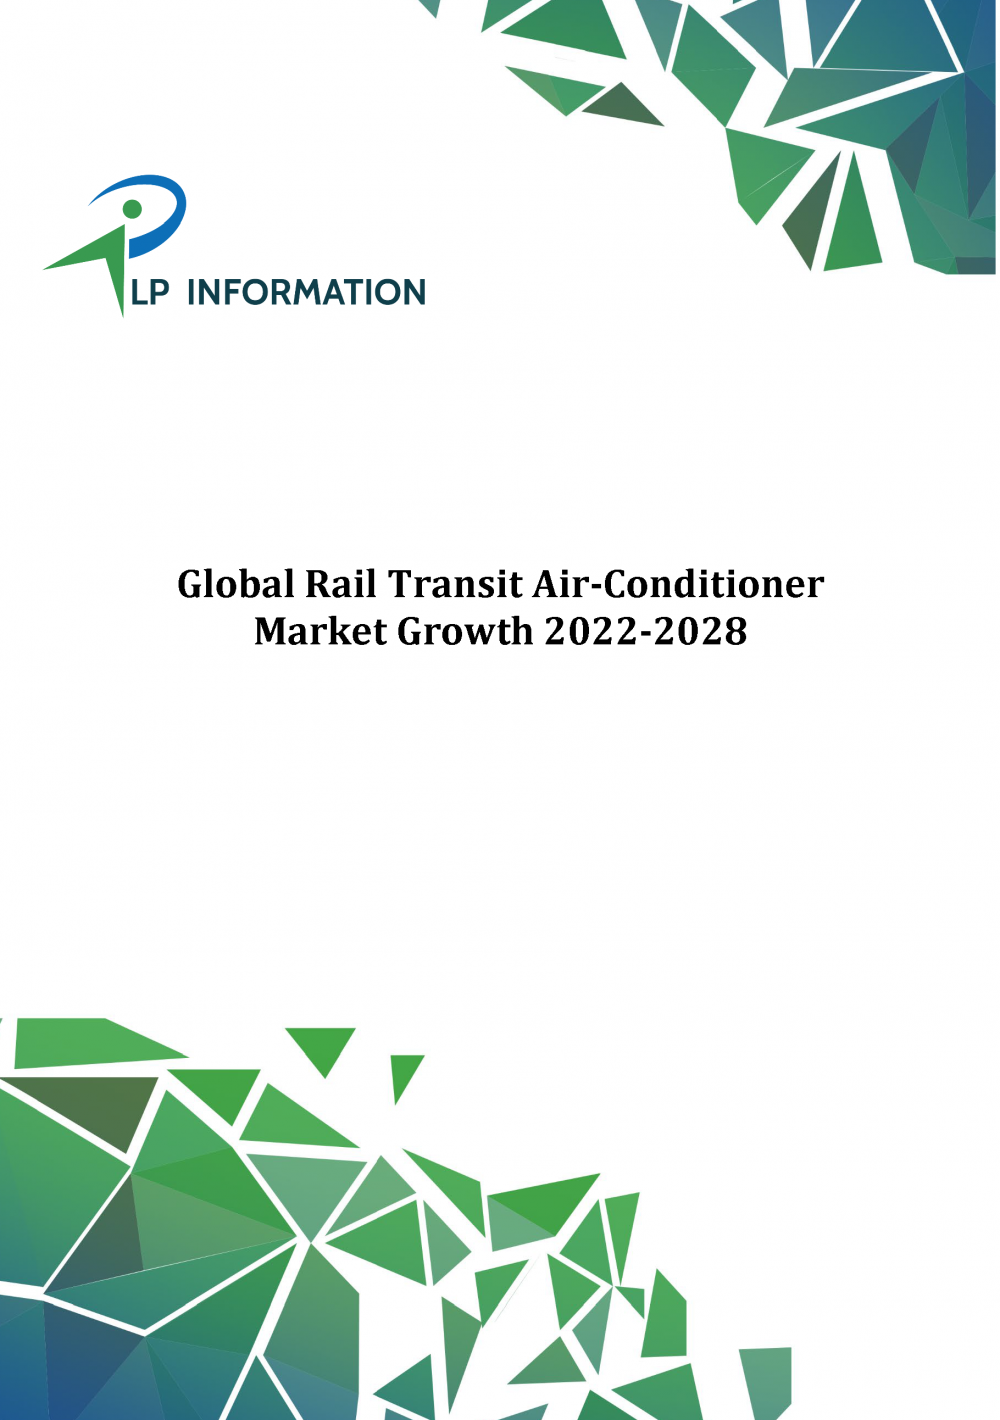 Global Rail Transit Air-Conditioner Market Growth 2022-2028